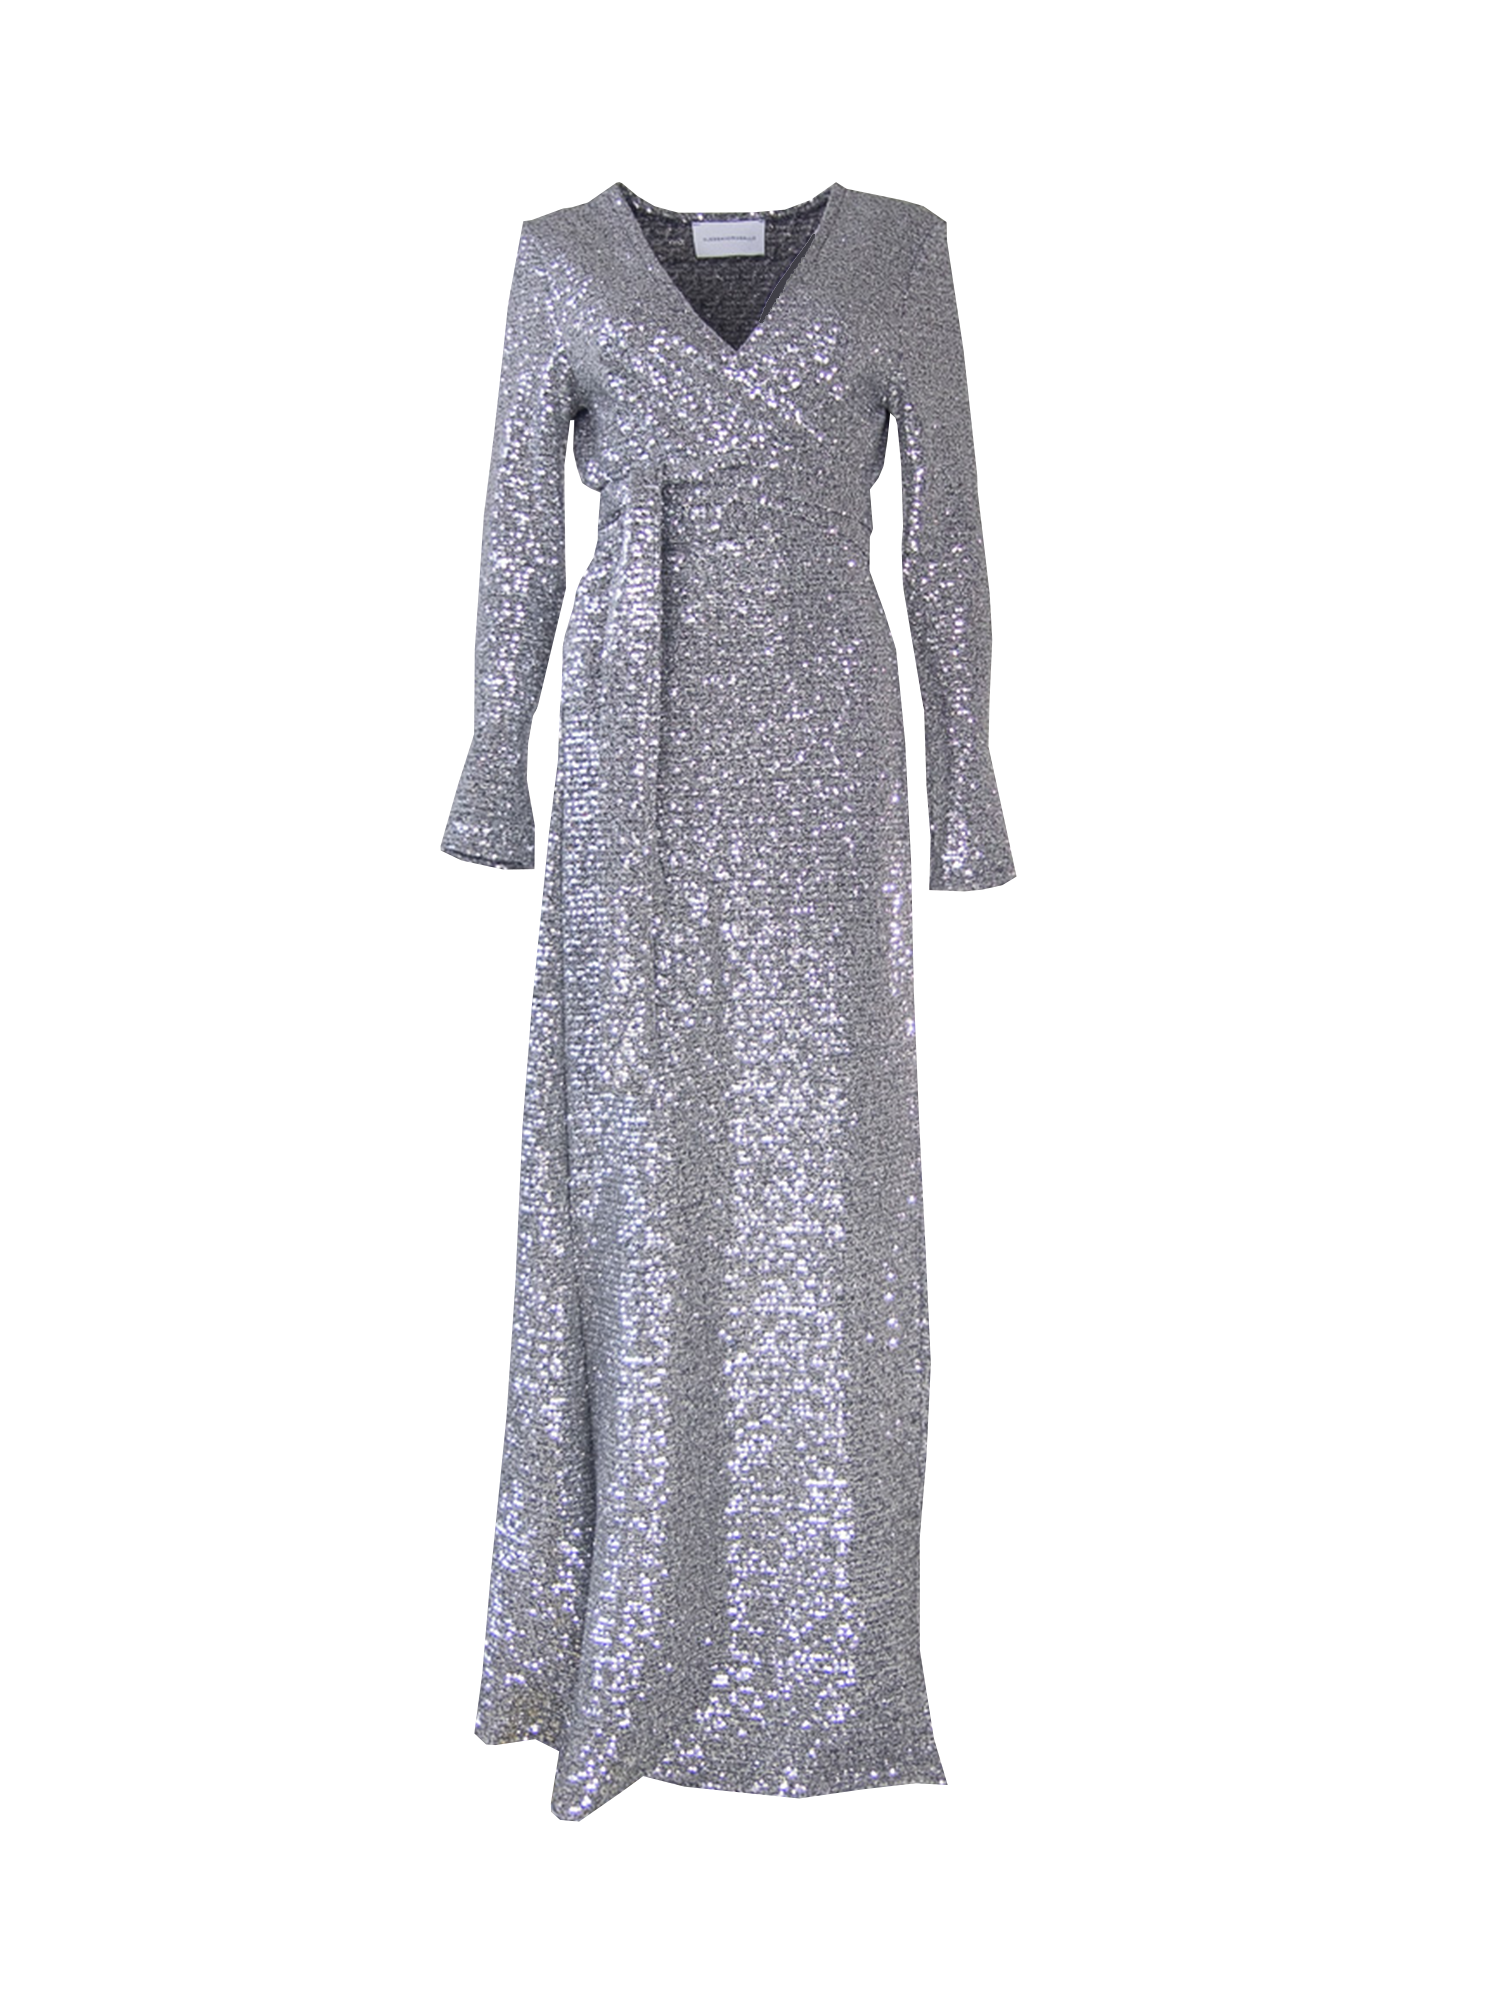 LETIZIA - long silver sequin dress